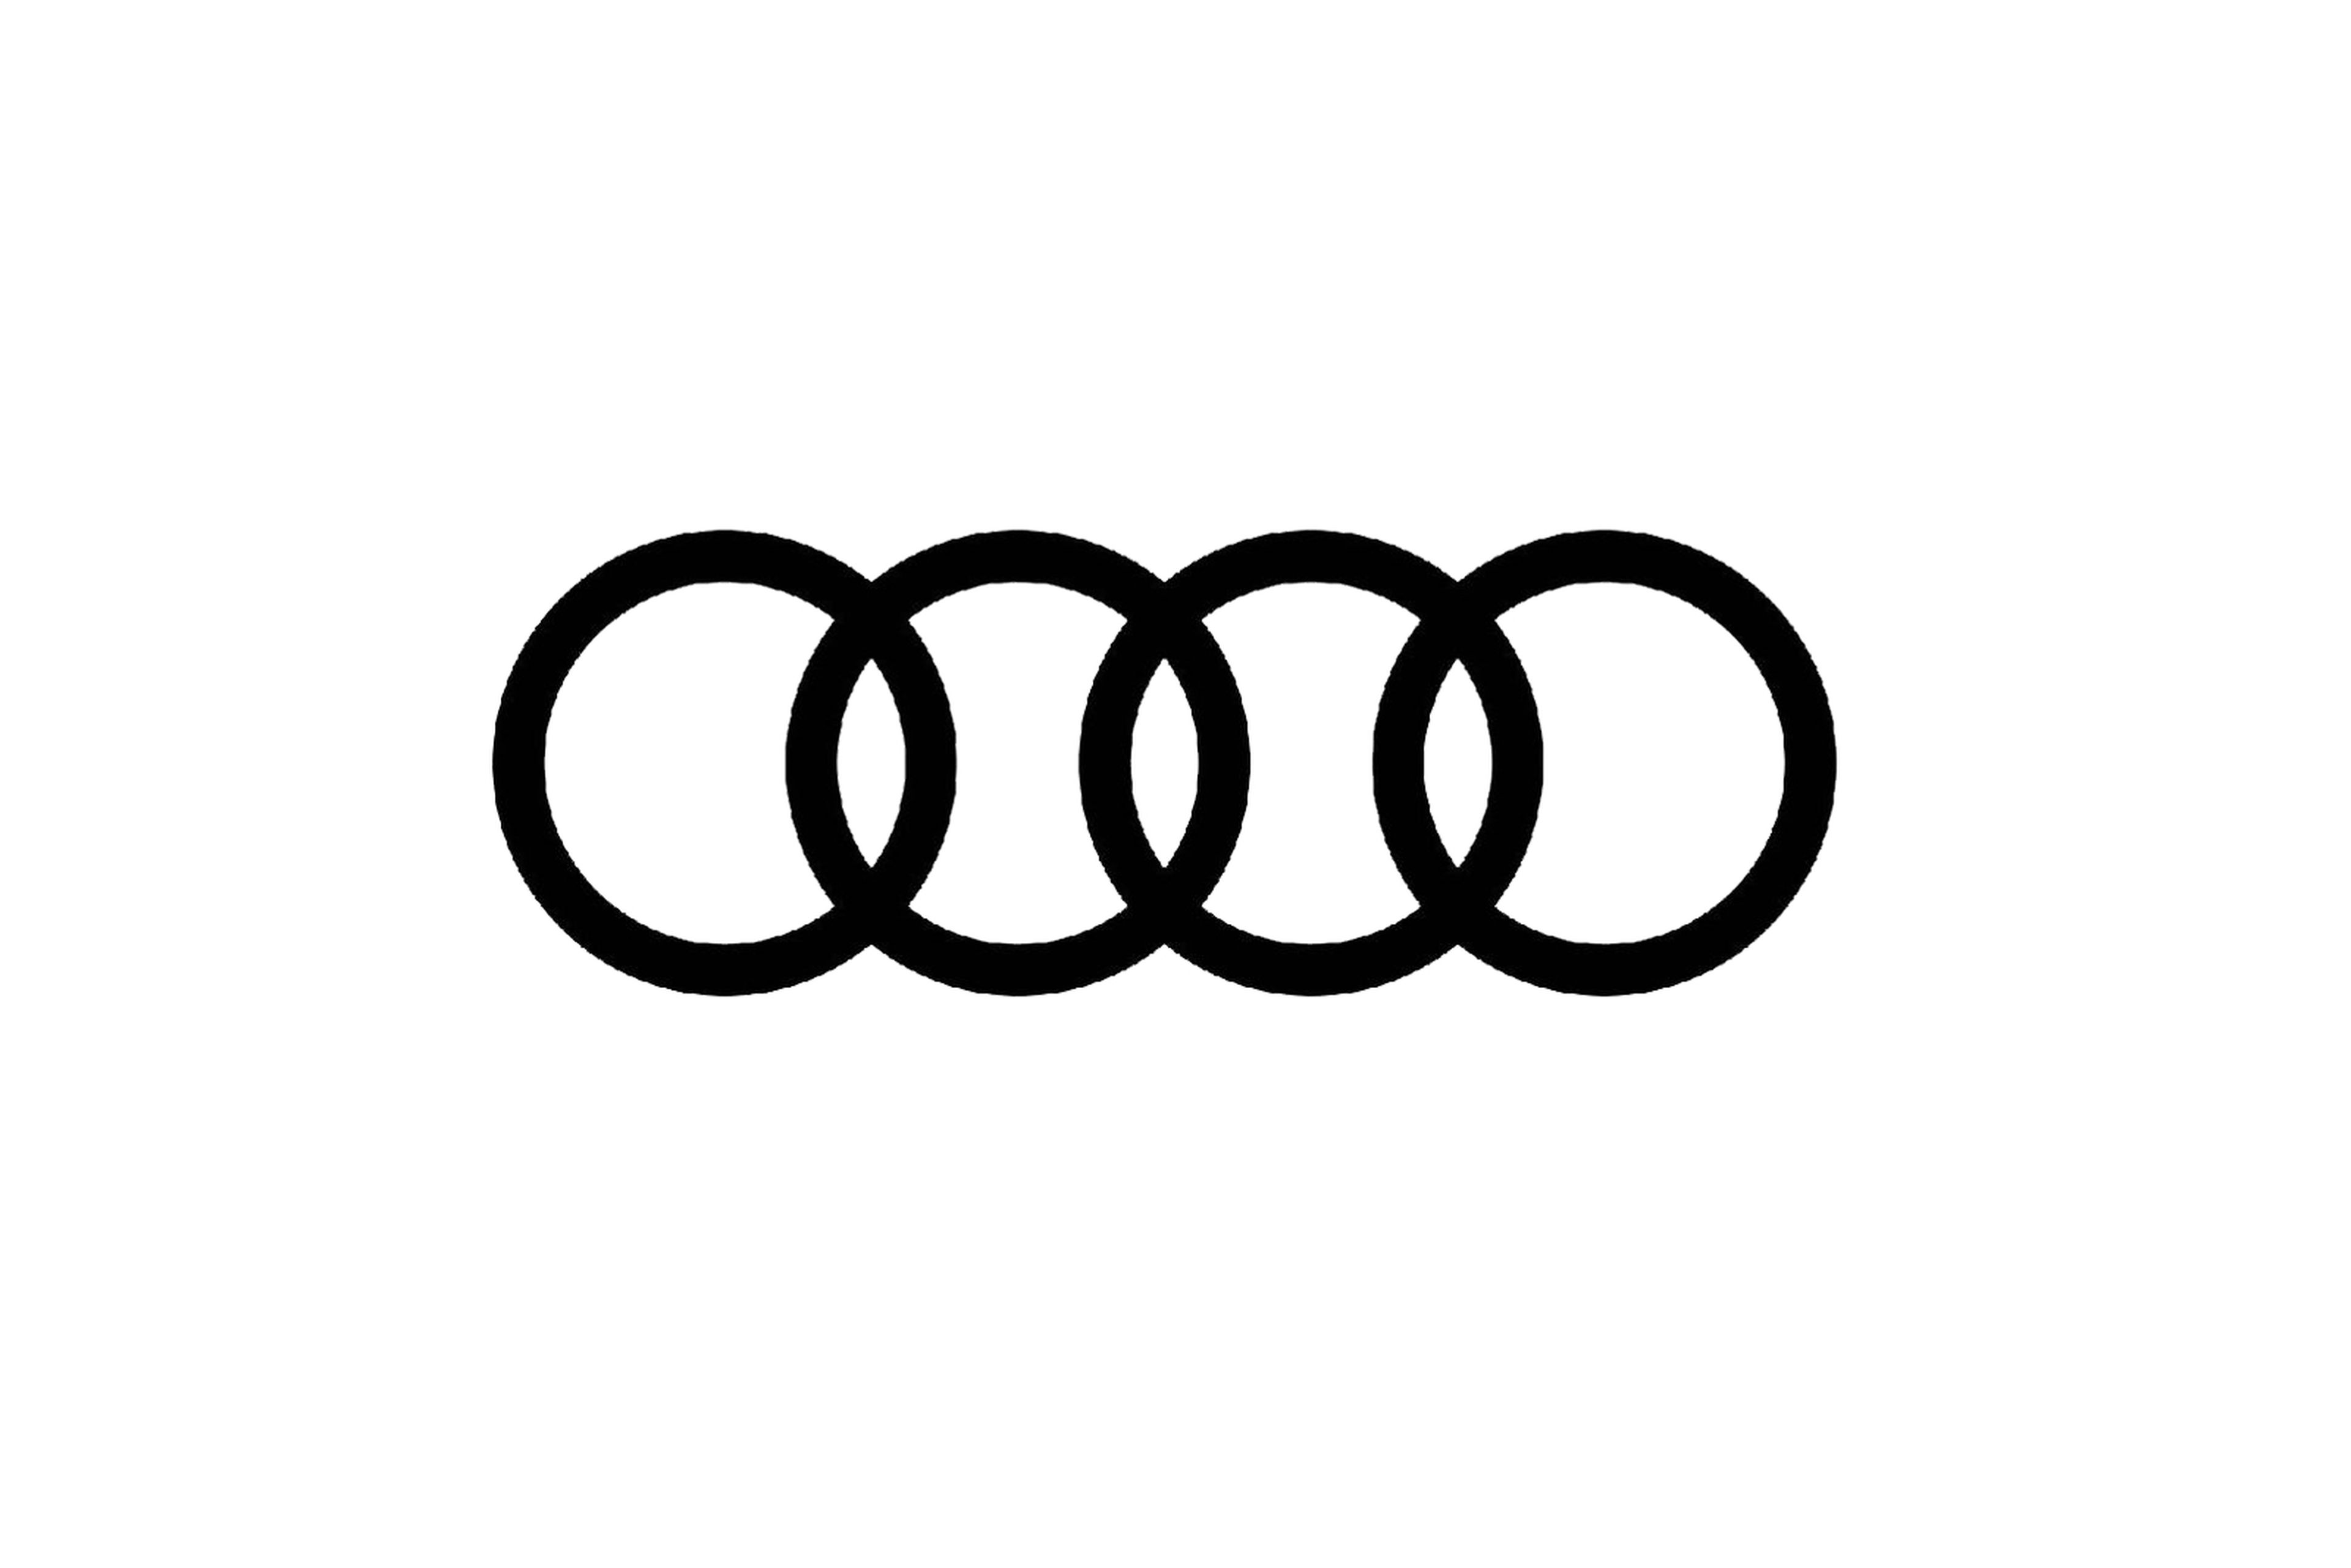 Logo Audi